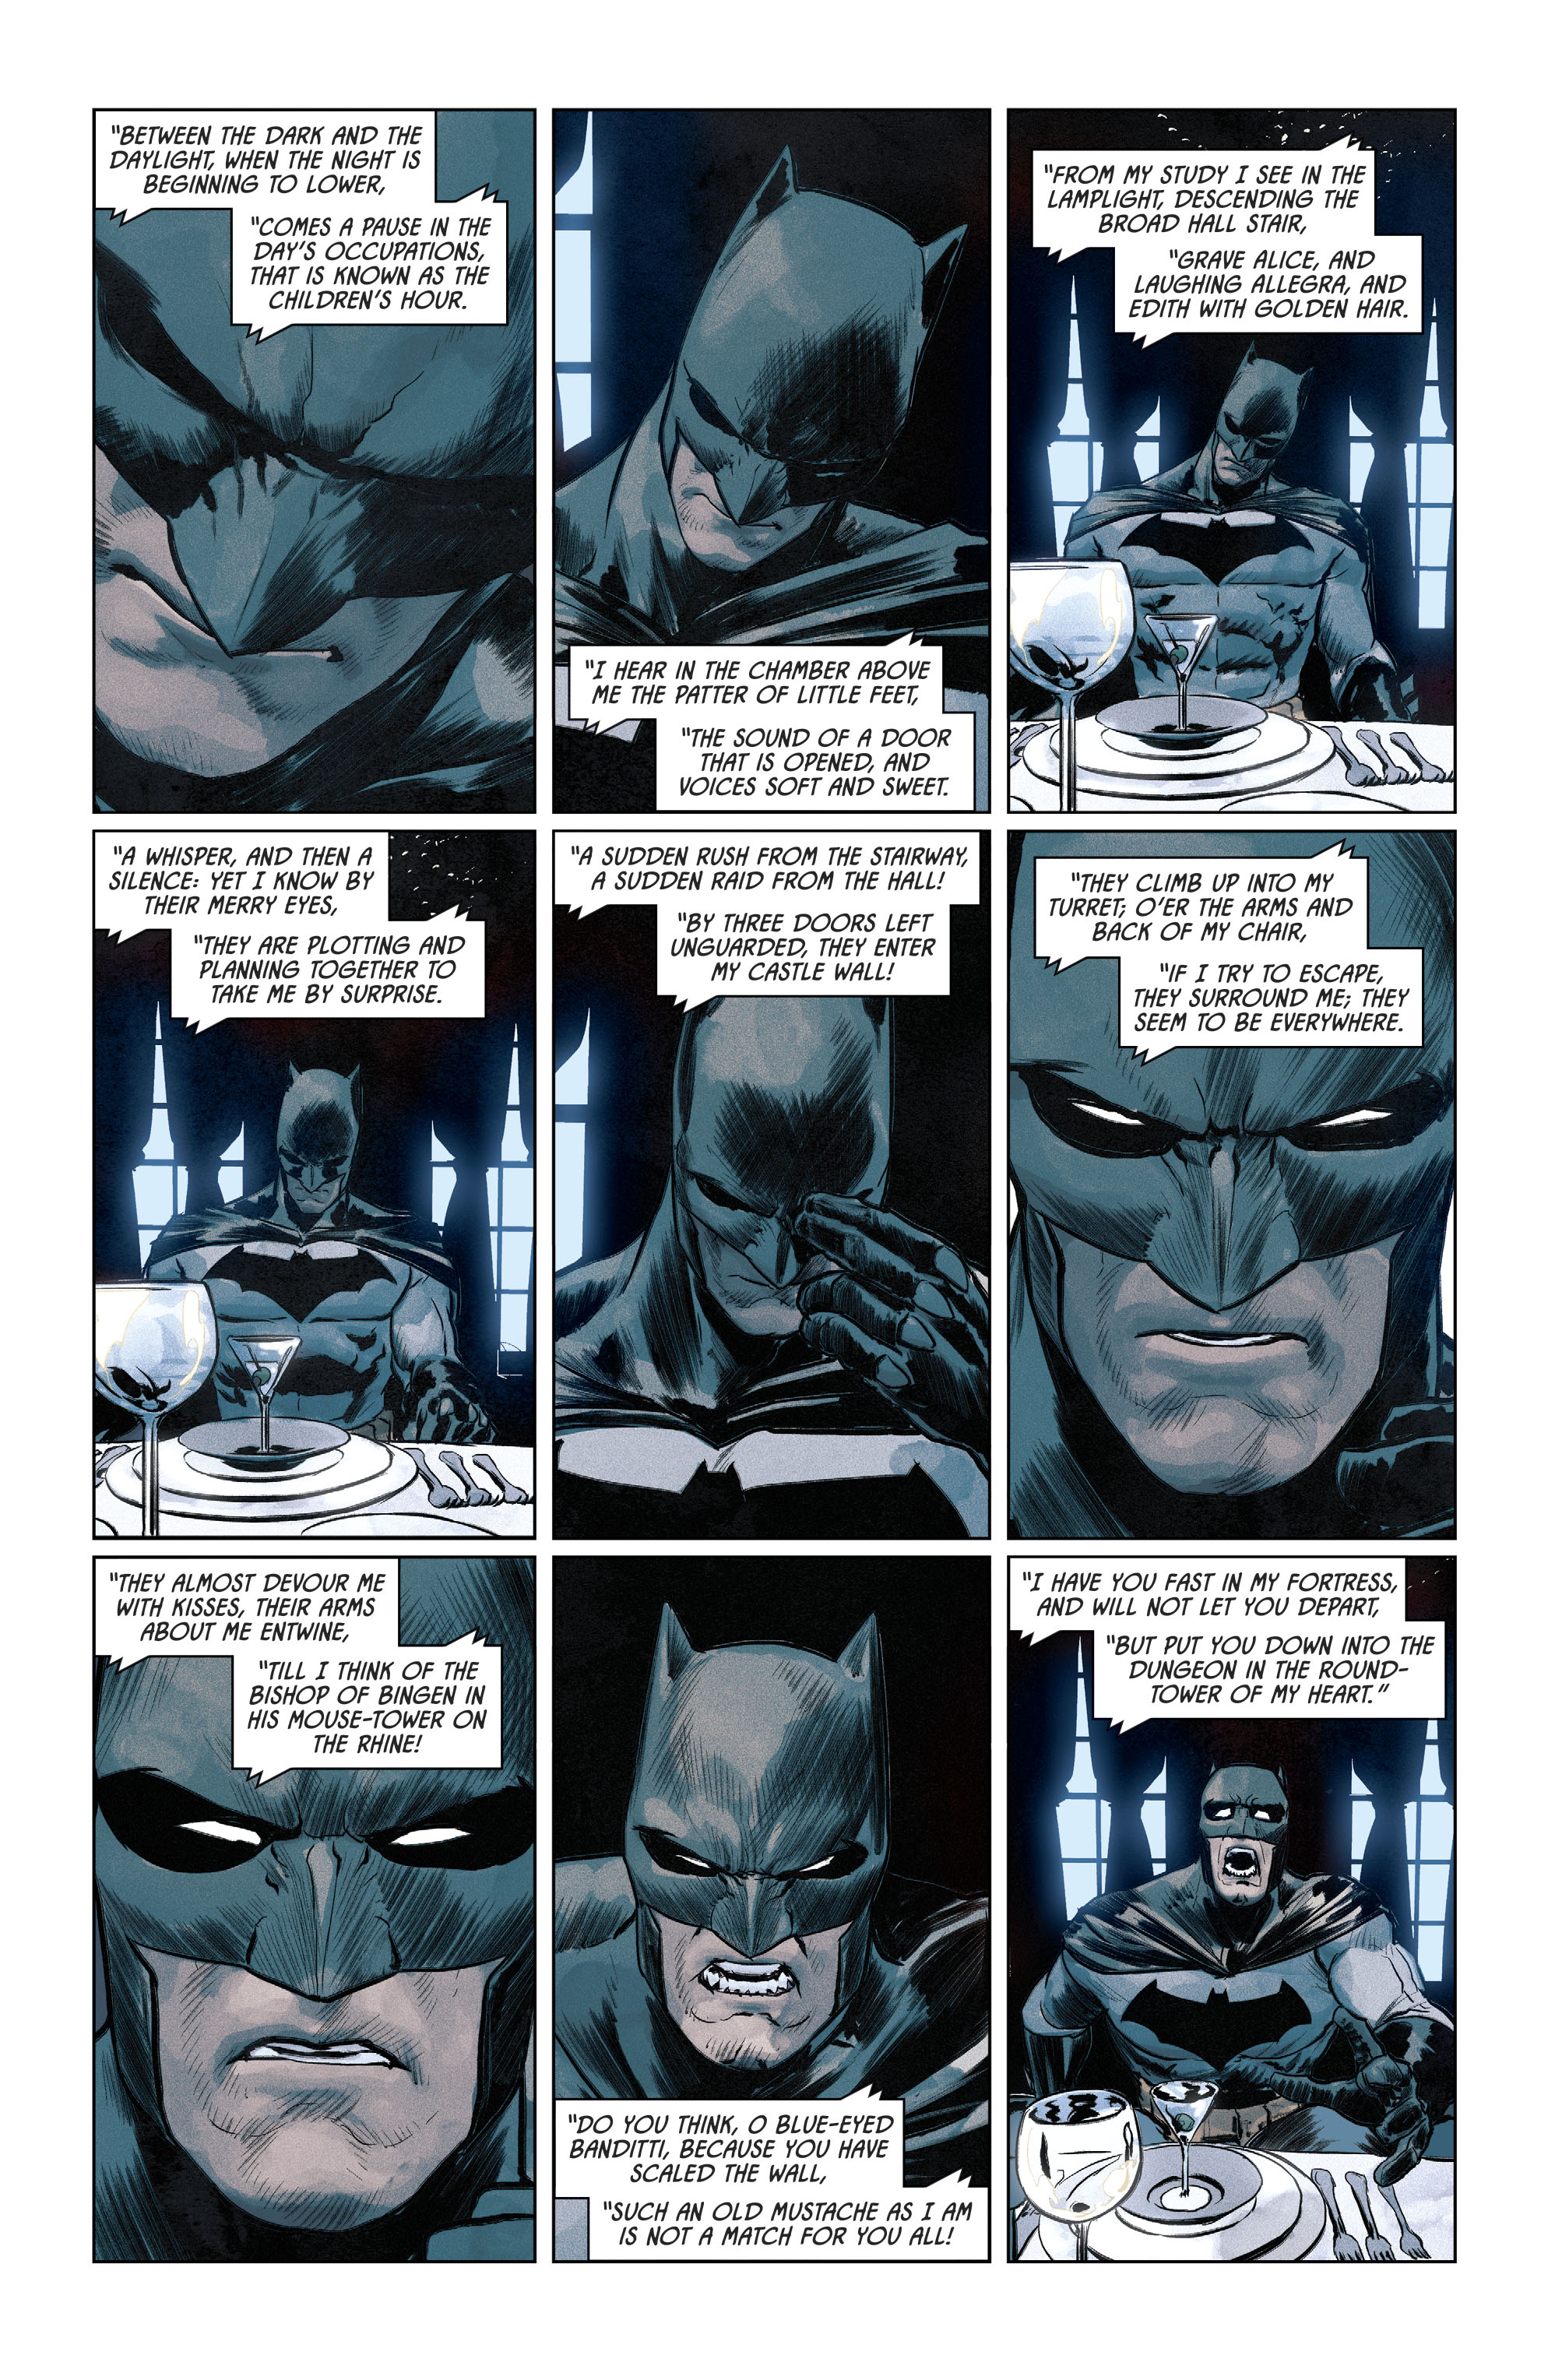 Batman (2016-): Chapter 83 - Page 3